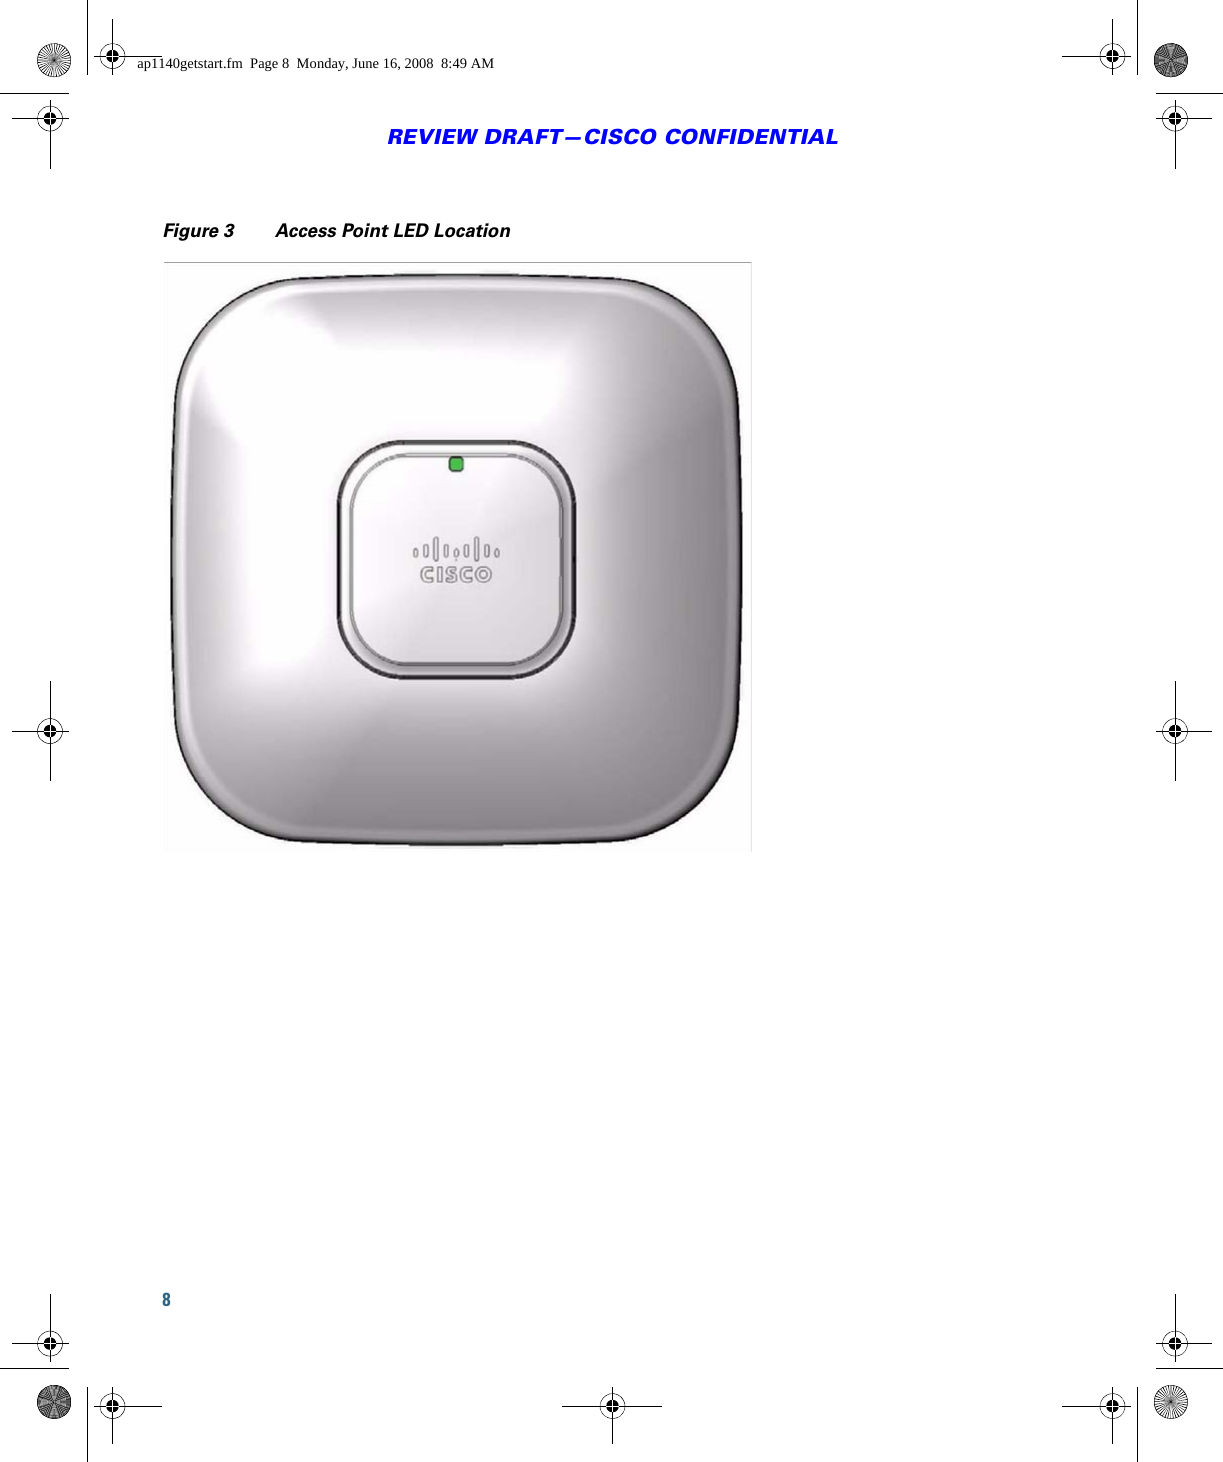 8REVIEW DRAFT—CISCO CONFIDENTIALFigure 3 Access Point LED Locationap1140getstart.fm  Page 8  Monday, June 16, 2008  8:49 AM